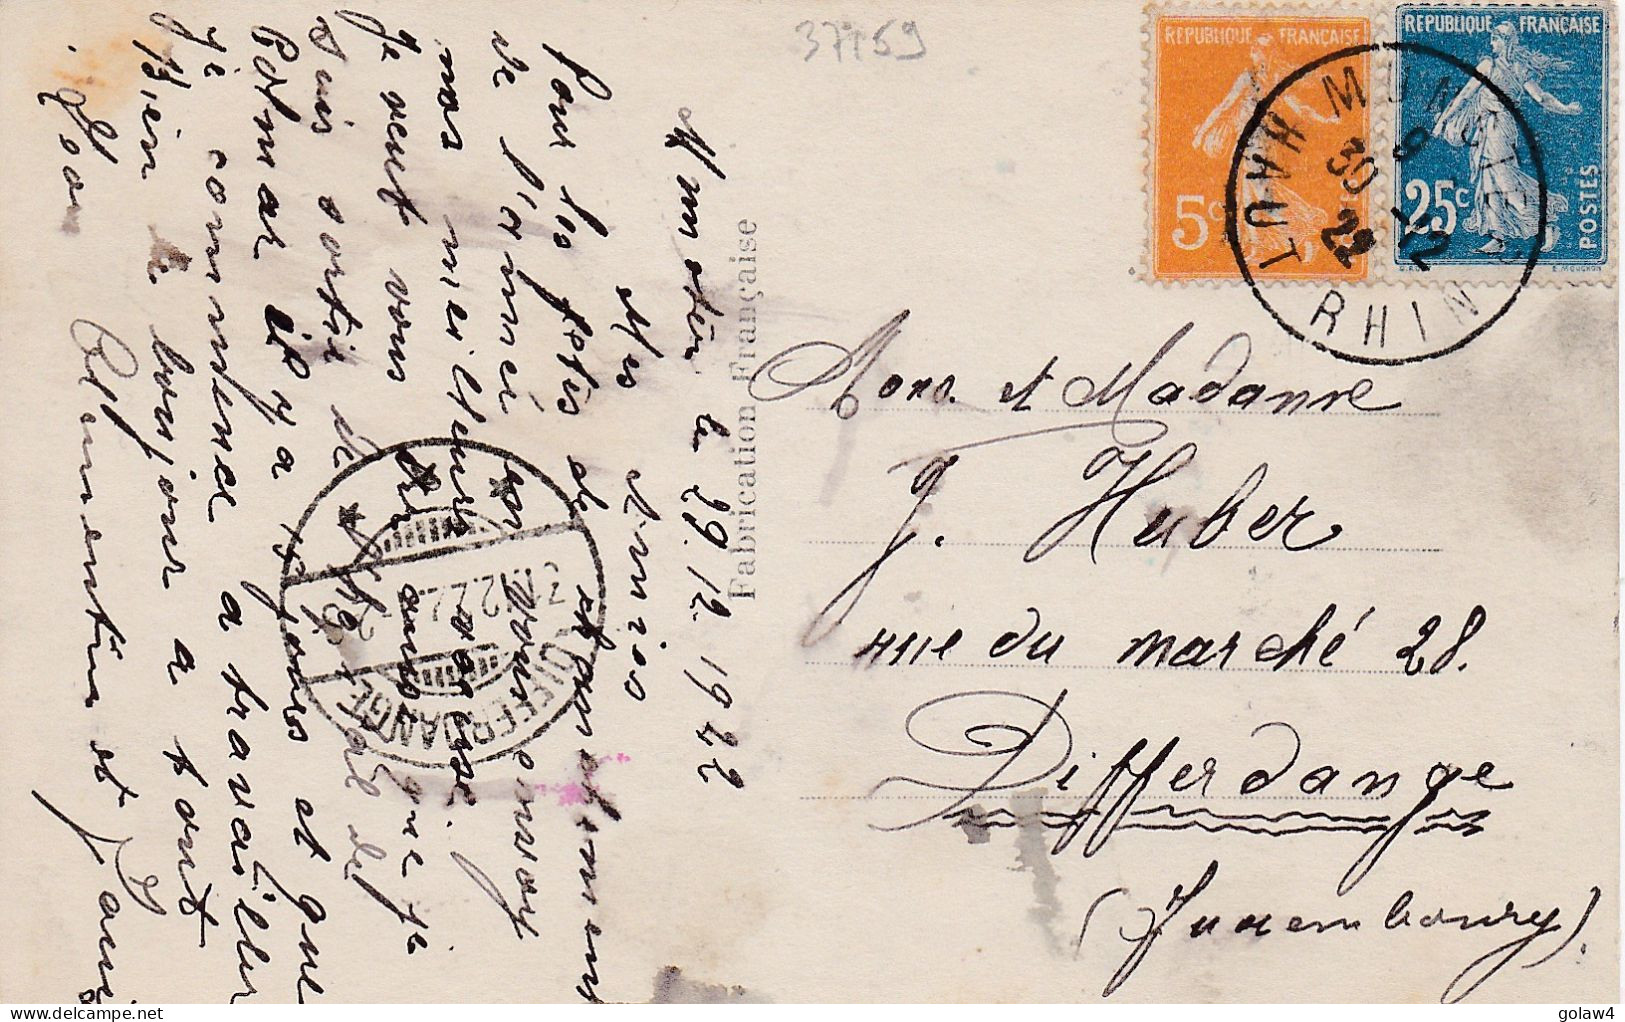 37159# SEMEUSE CARTE POSTALE Obl MUNSTER HAUT RHIN 1922 ALSACE Pour DIFFERDANGE LUXEMBOURG - Briefe U. Dokumente